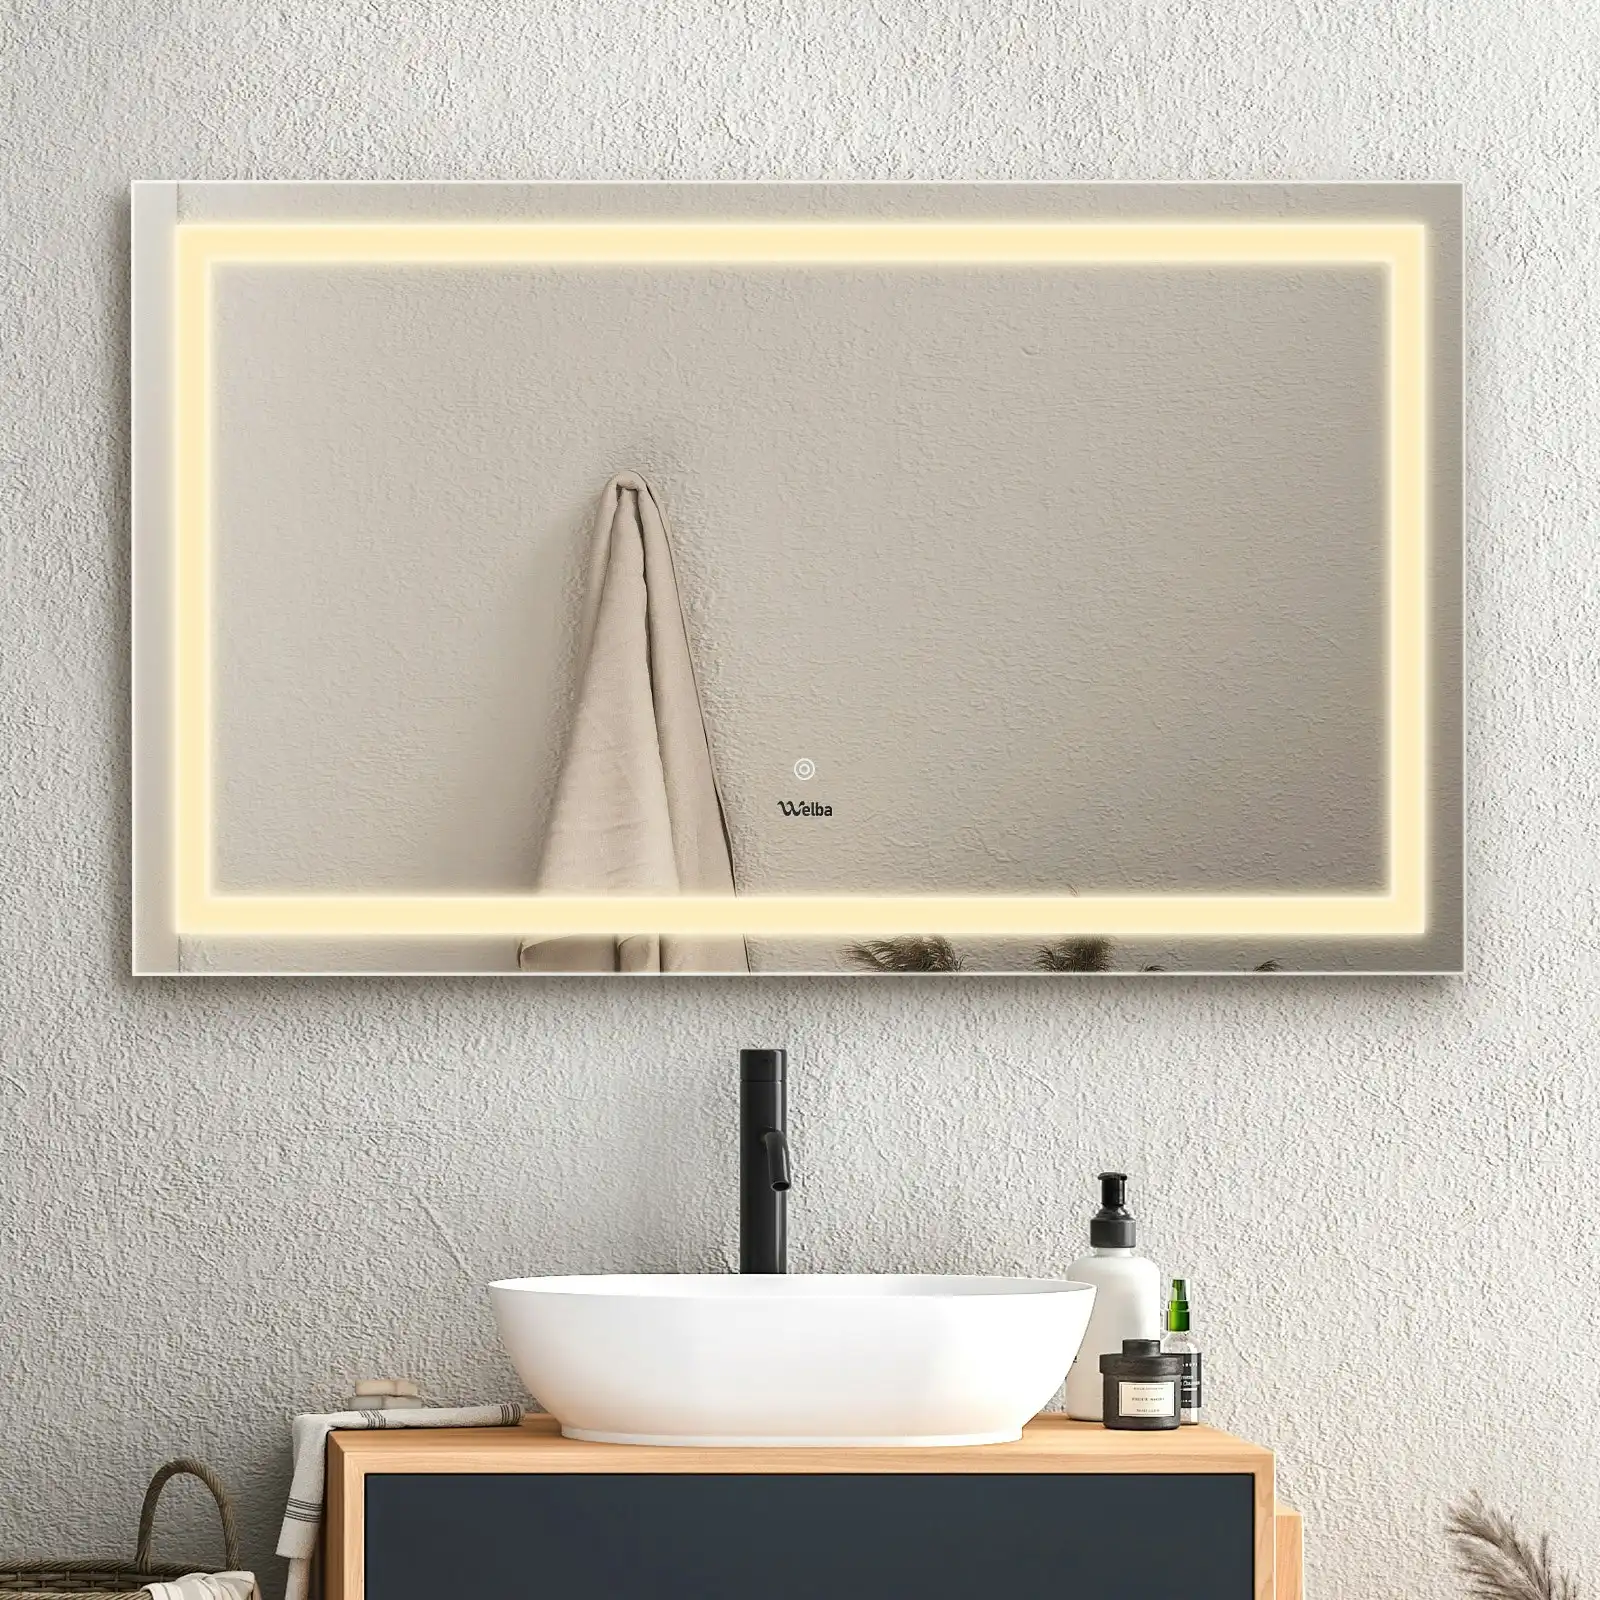 Welba LED Rectangle Bathroom Mirror Anti-fog Makeup Wall Mirrors 1200x700mm